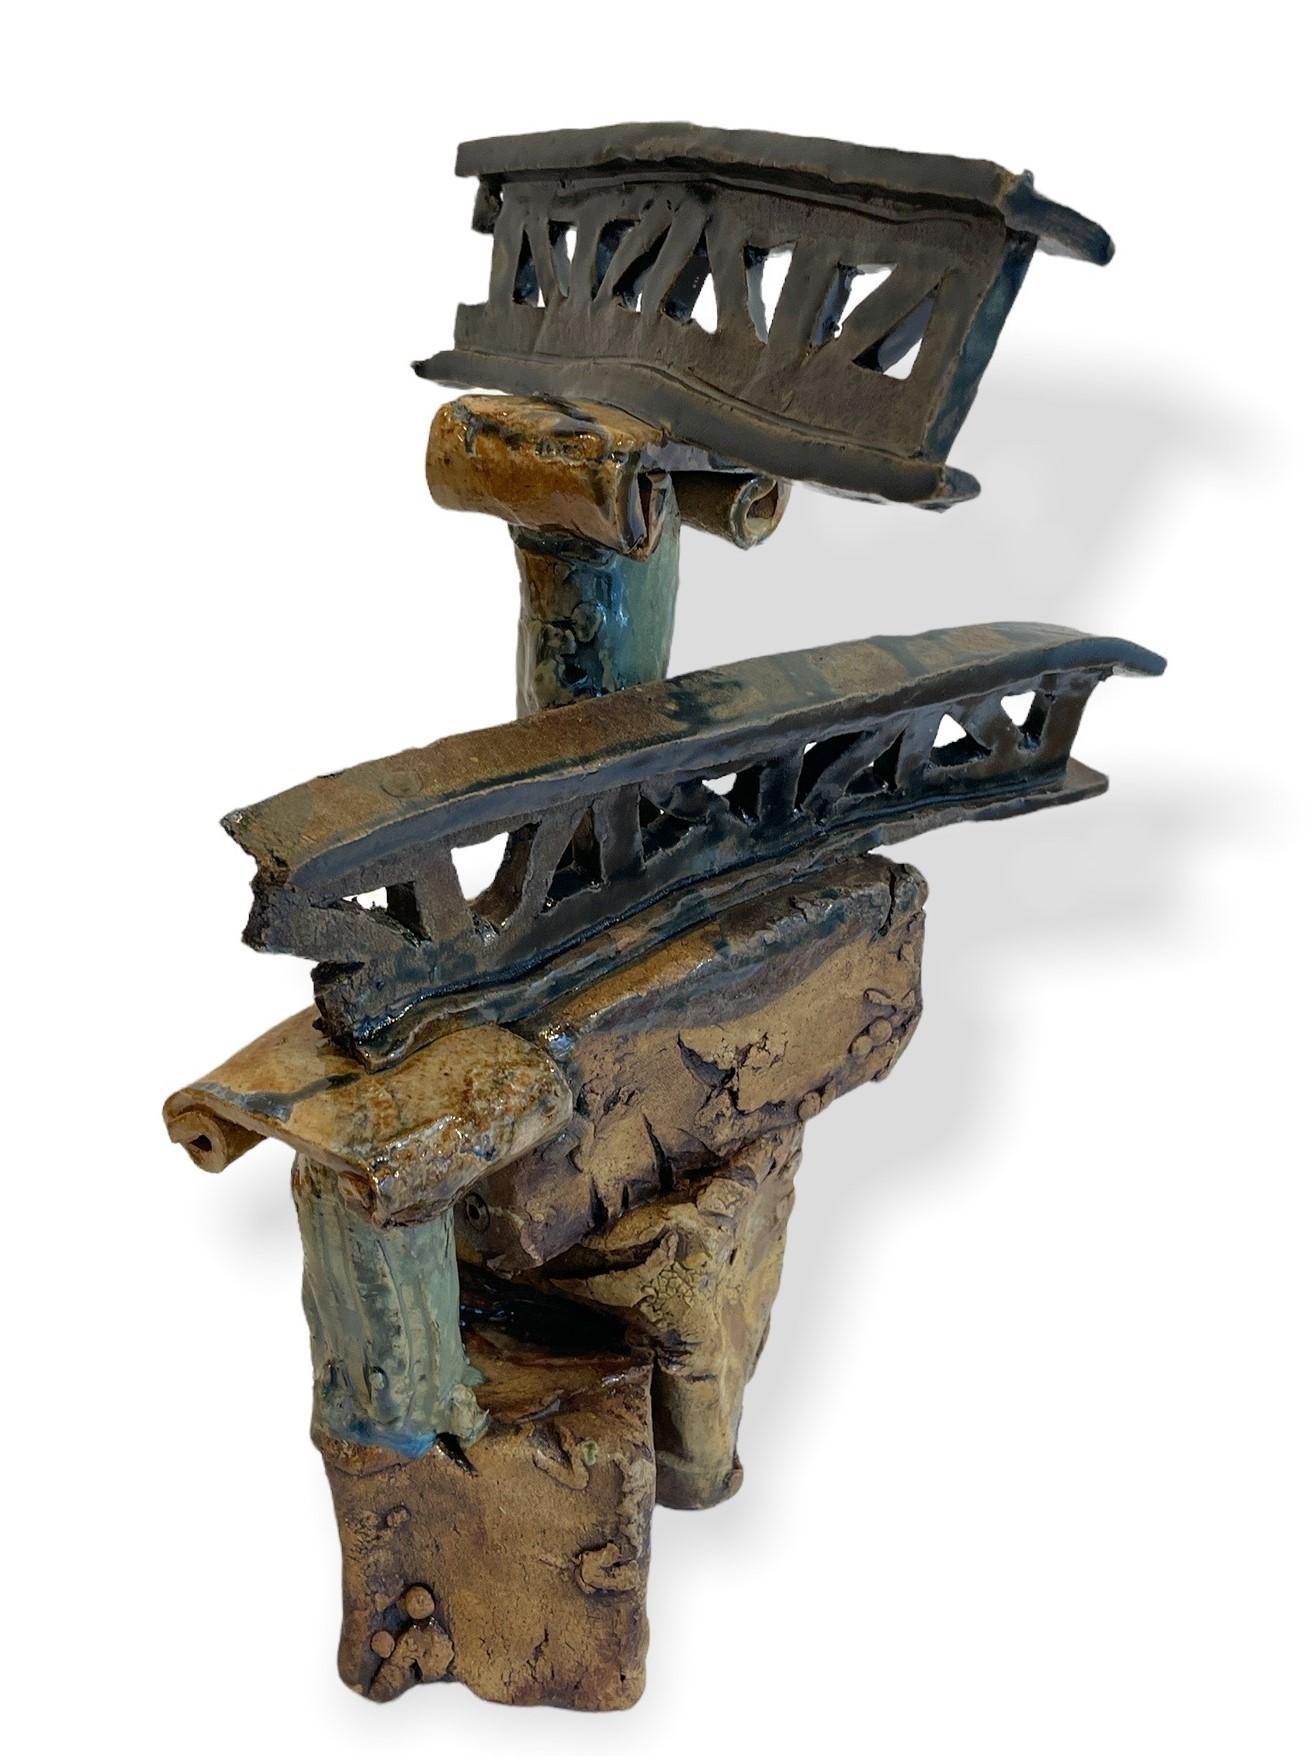 Hand-Crafted Hand Built Earthenware Sculpture with Ionic Columns & Bridge Girders, Drip Glaze